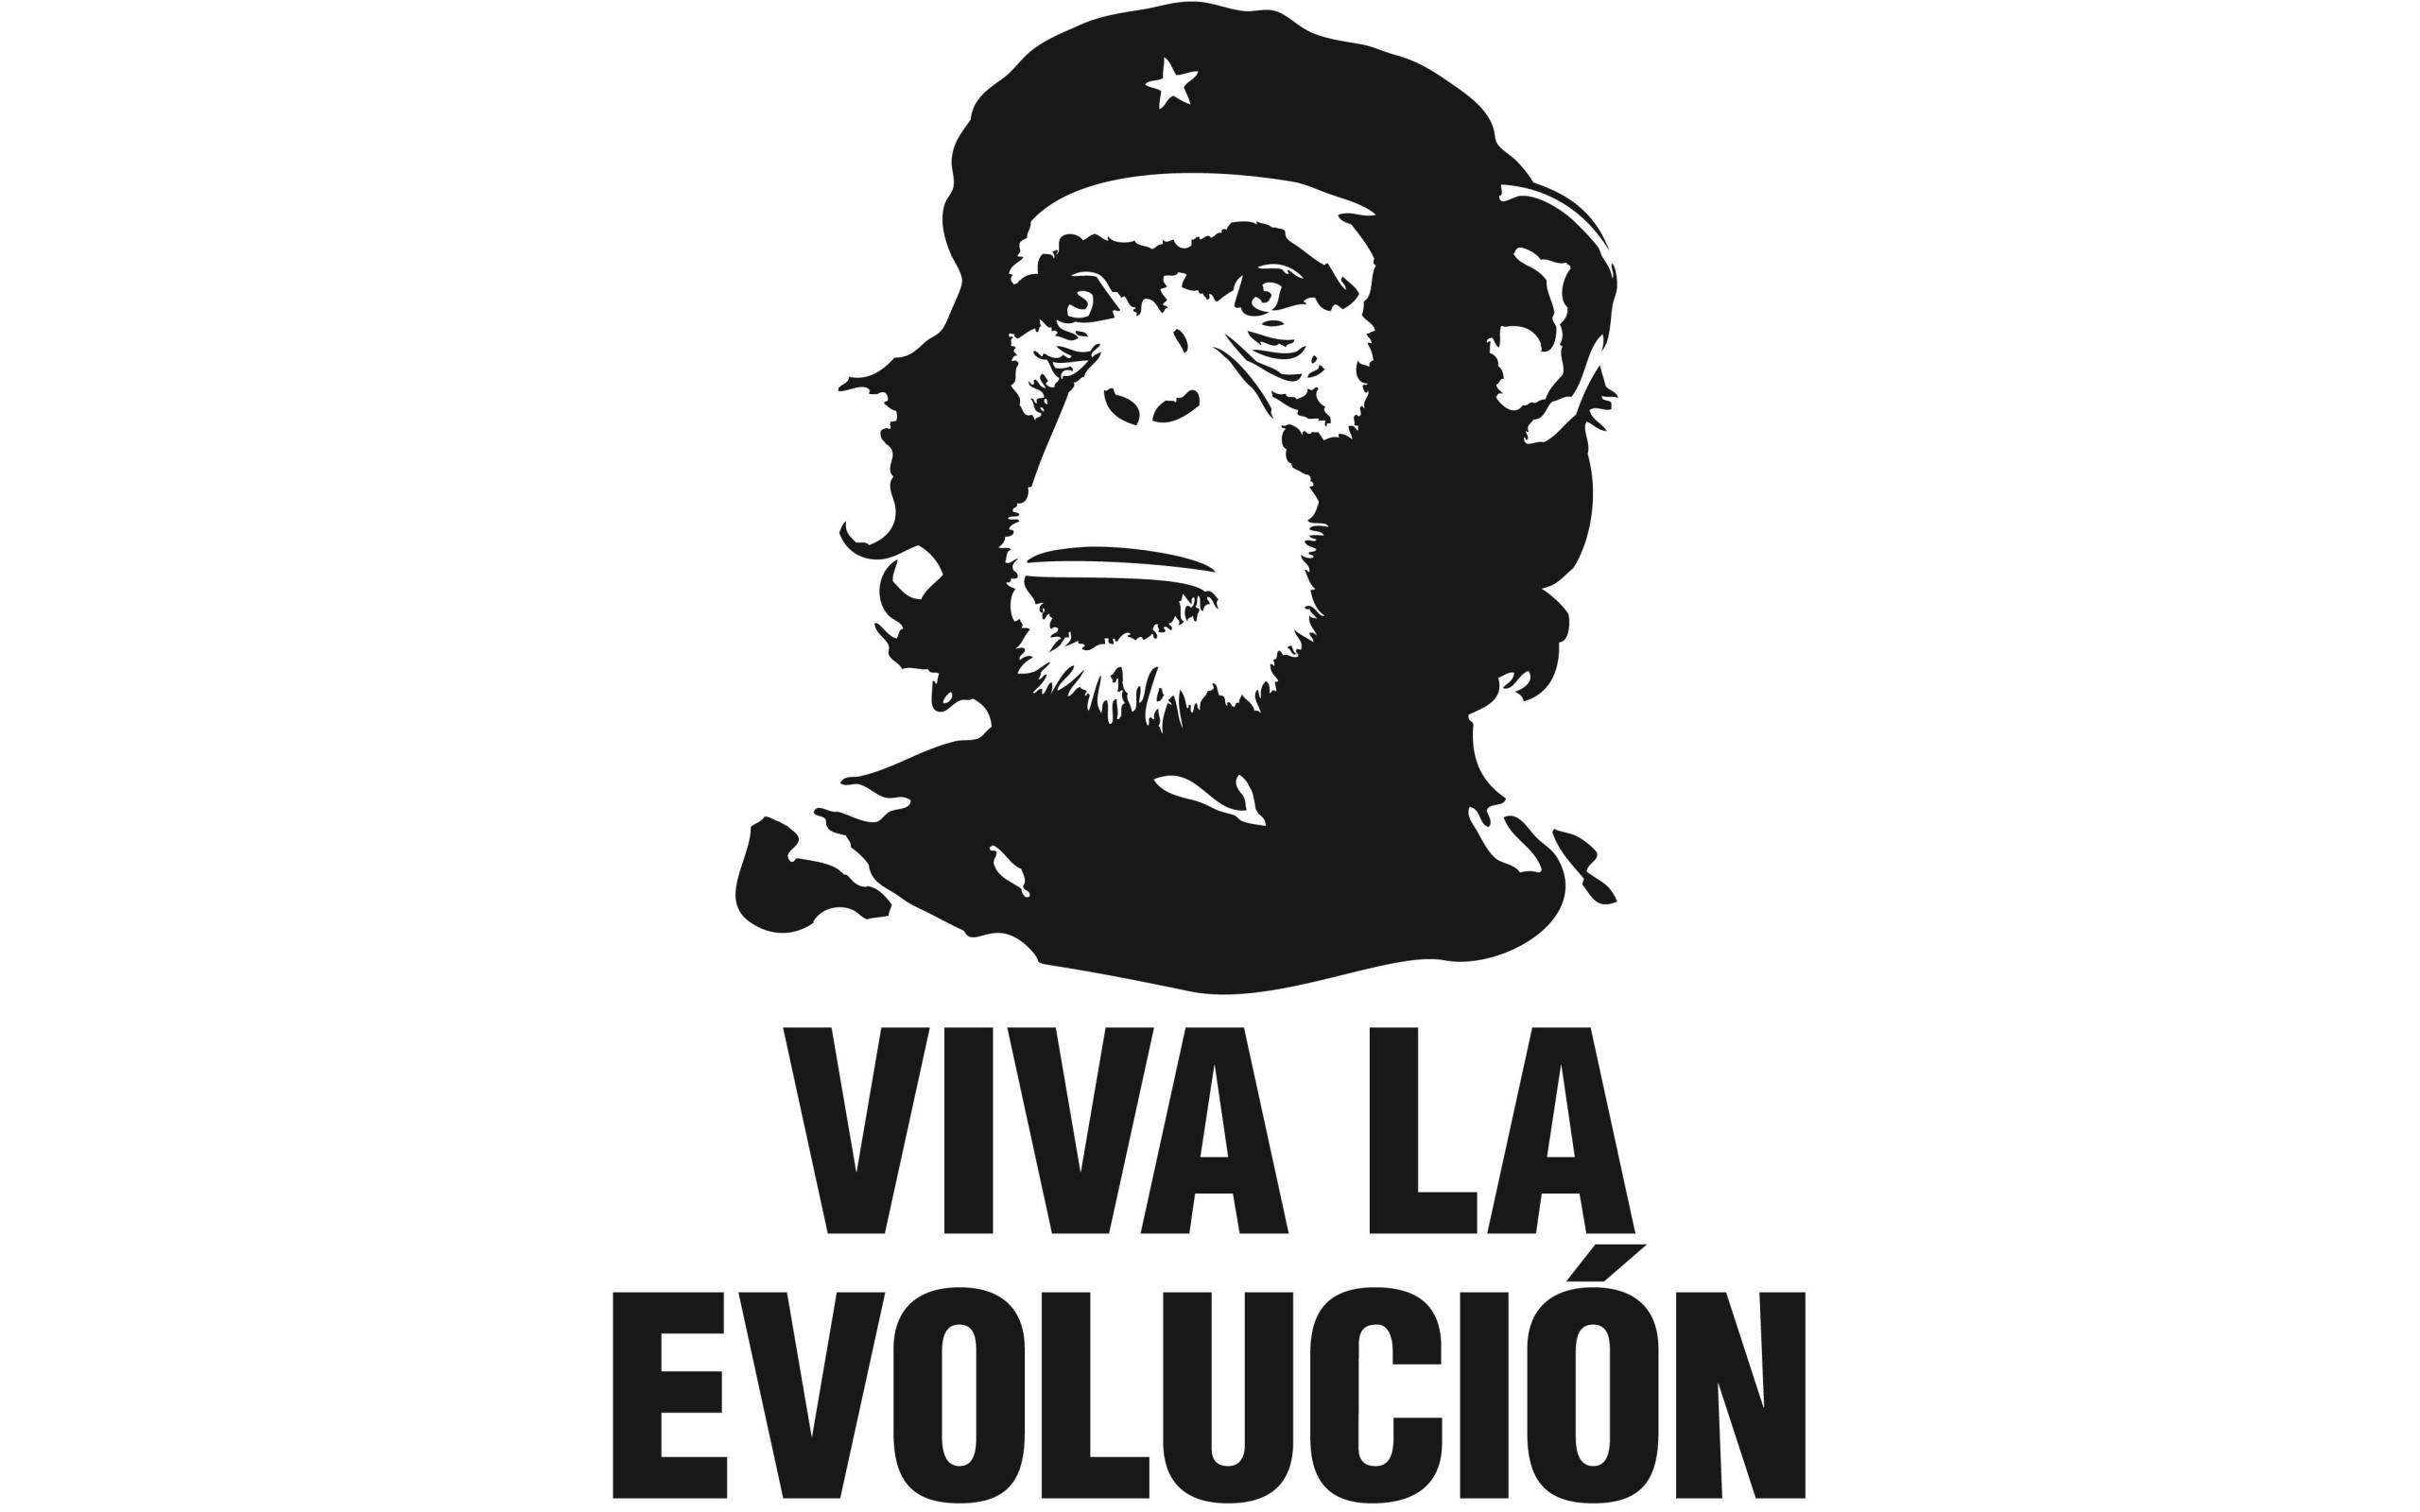 General 2560x1600 humor white background Che Guevara minimalism chimpanzees evolution